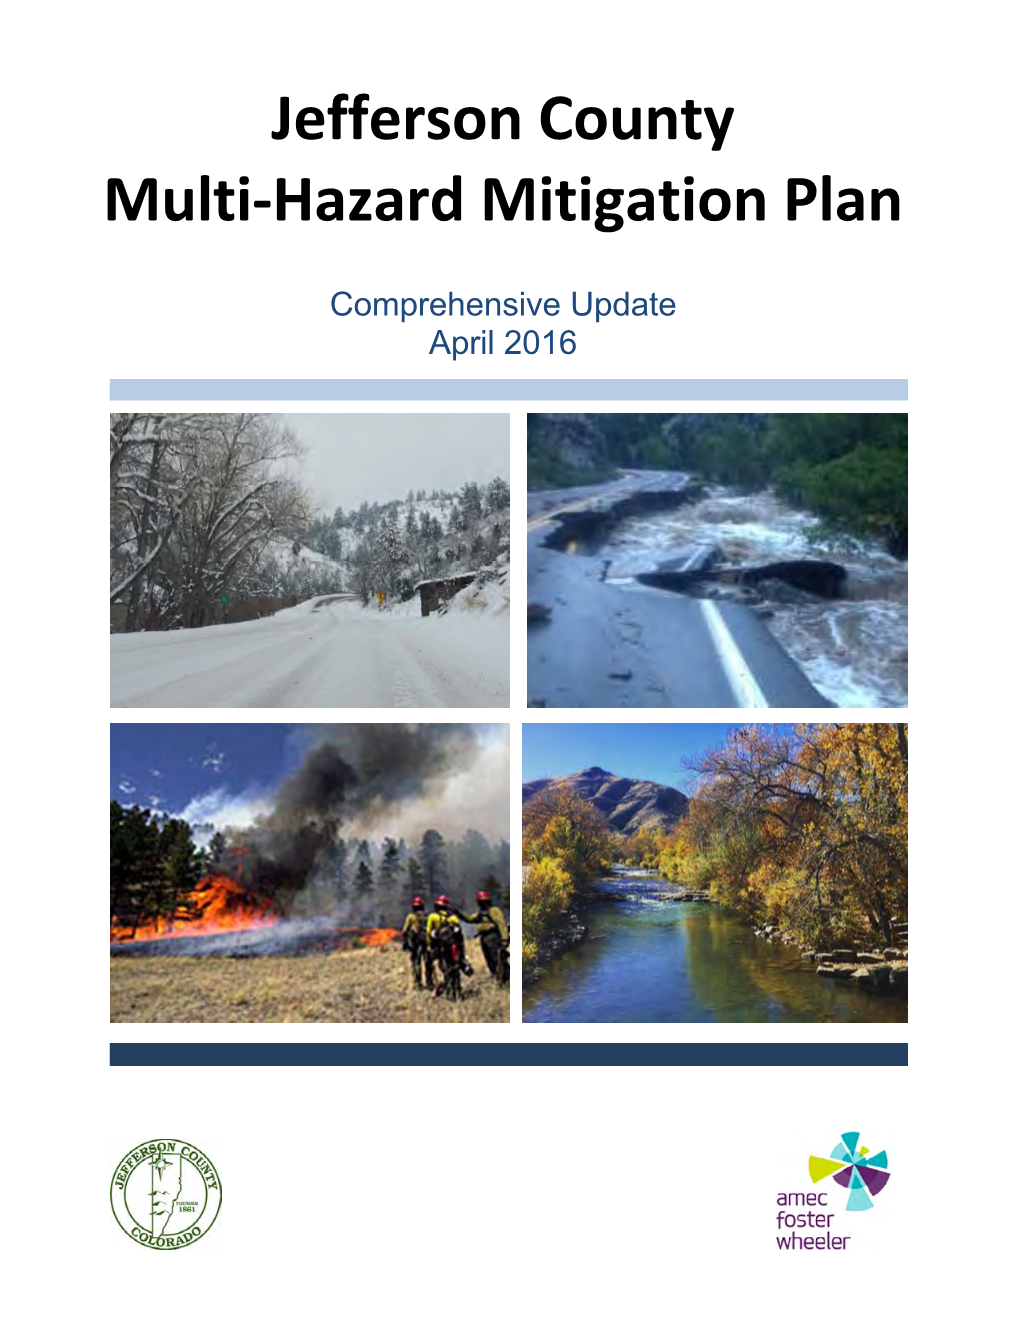 Jefferson County Multi-Hazard Mitigation Plan